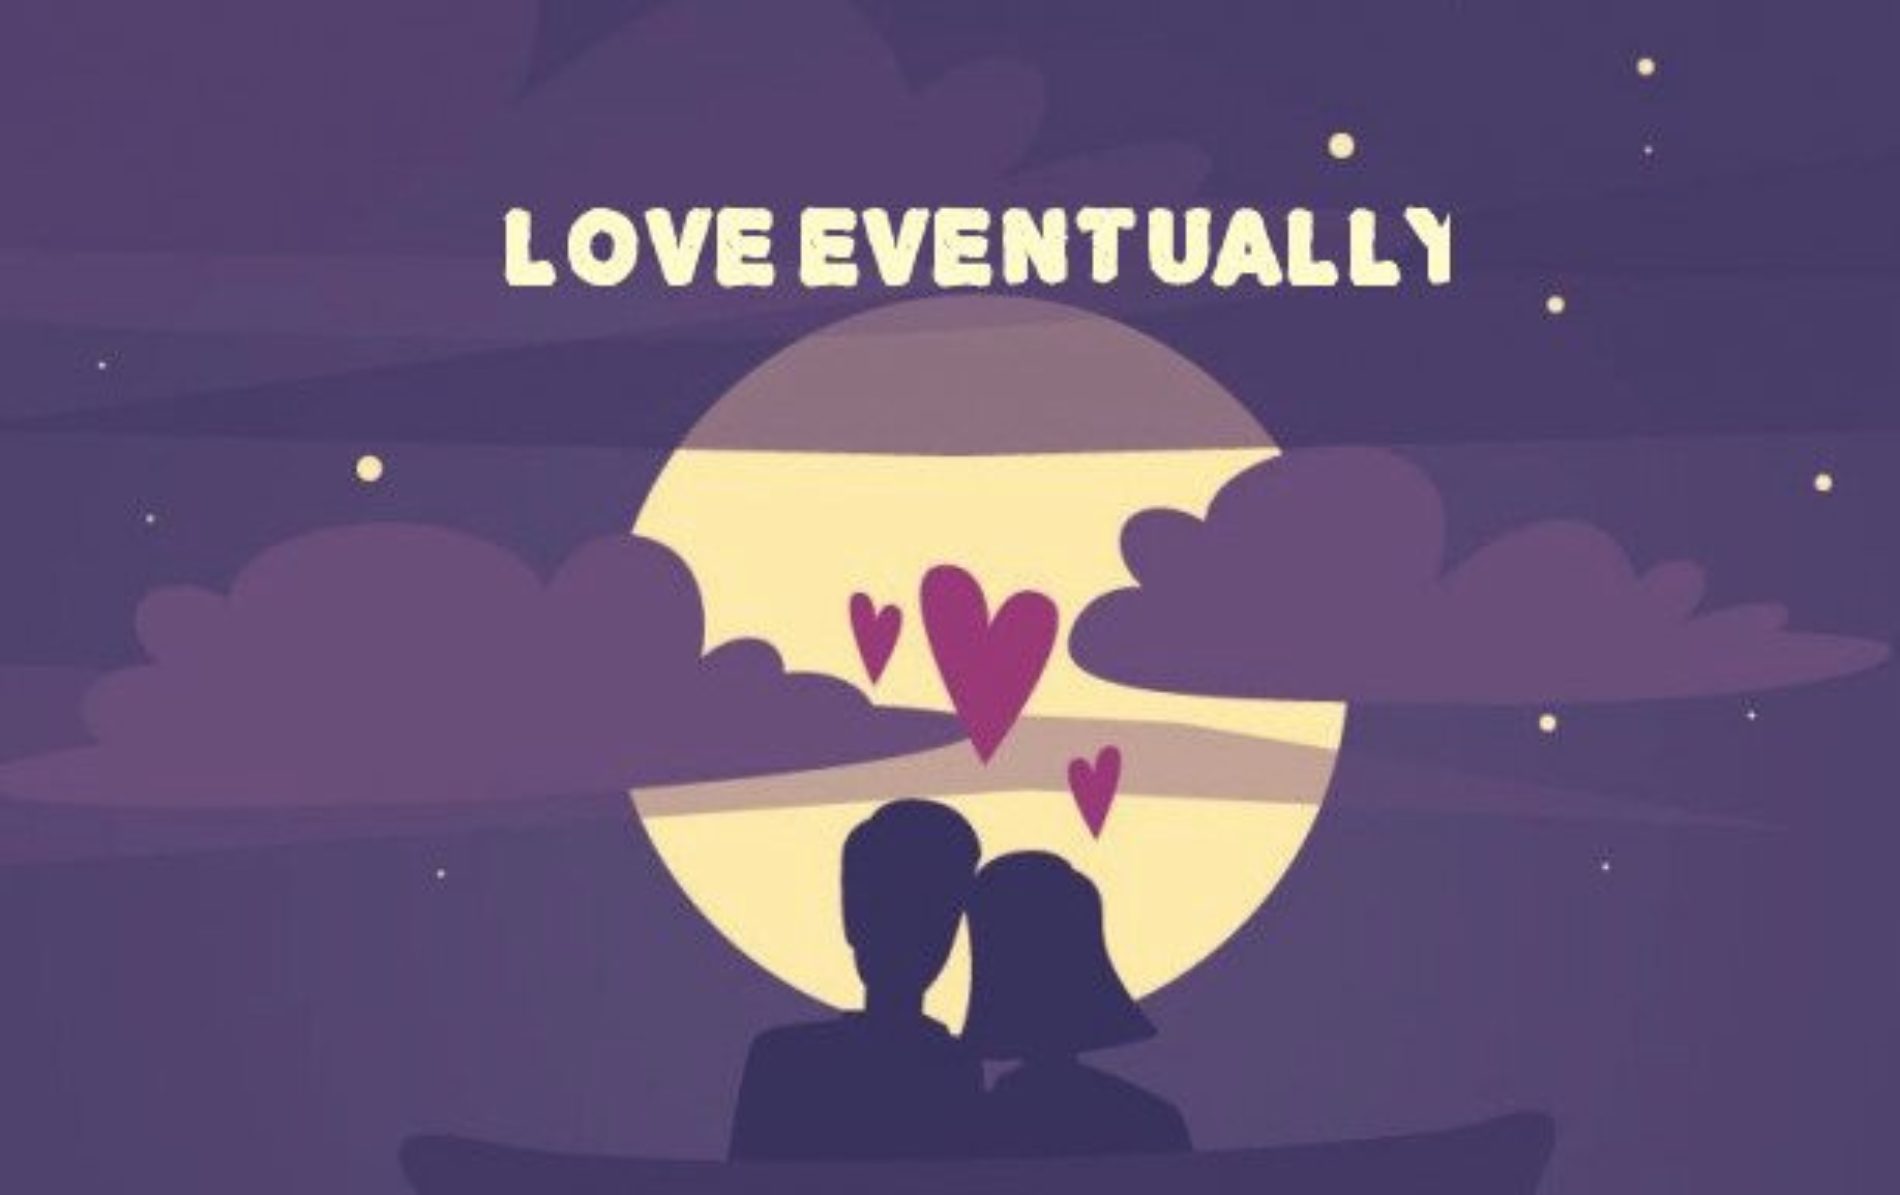 Love Eventually: A New Novel You Should Read